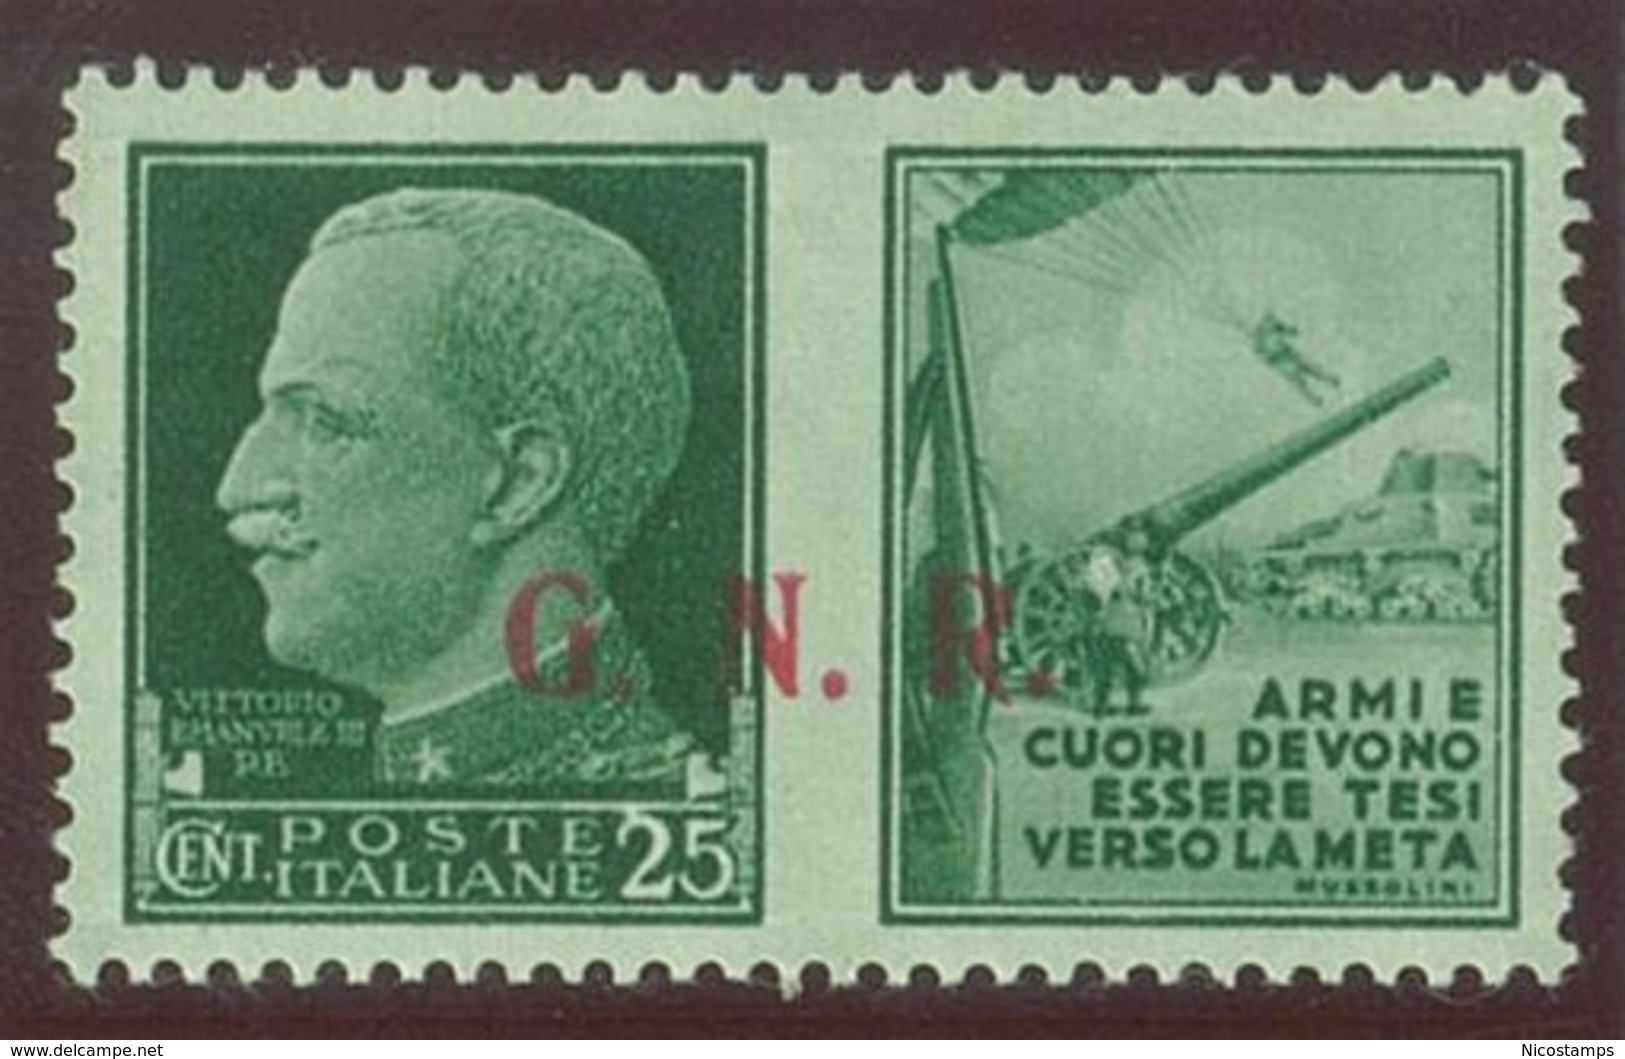 ITALIA REPUBBLICA SOCIALE ITALIANA (R.S.I.) SASS. P.G. 14/IIIed  NUOVO - Oorlogspropaganda